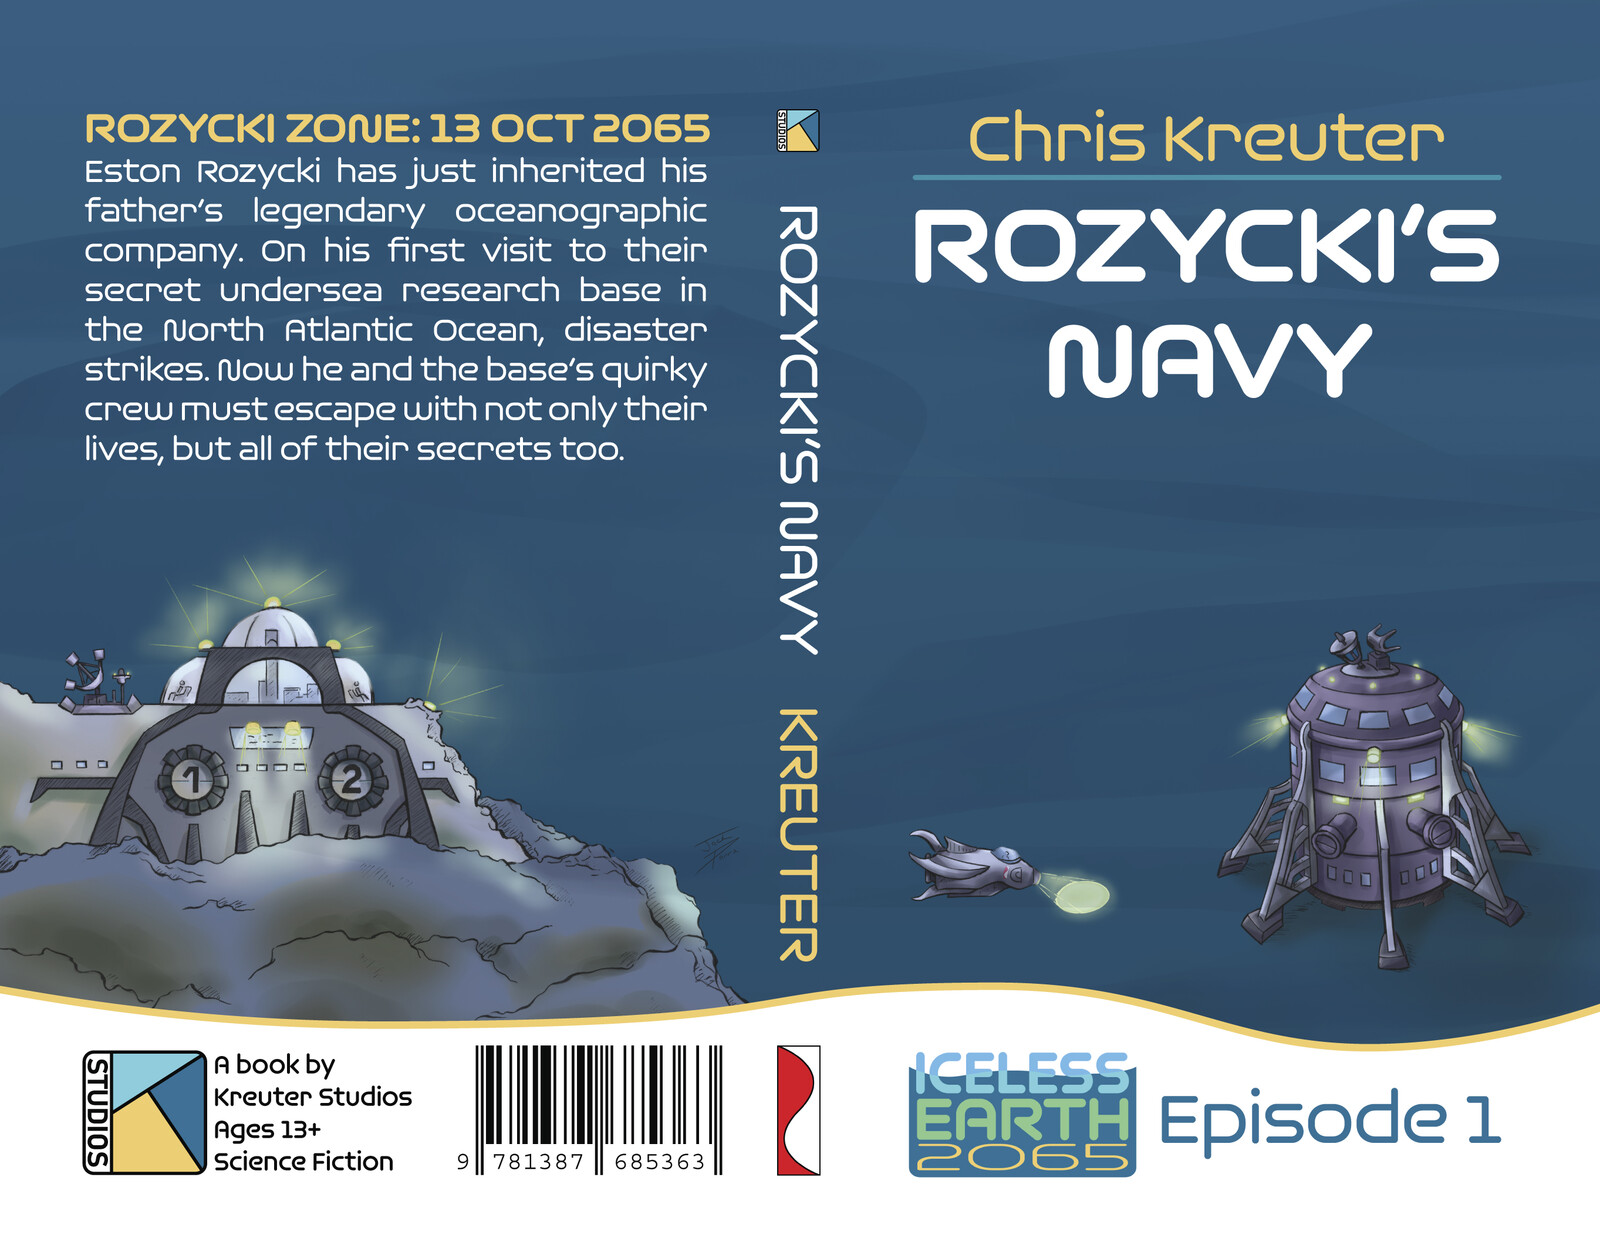 Rozycki's Navy (Trade Dress)
Graphic Design by Chris Kreuter